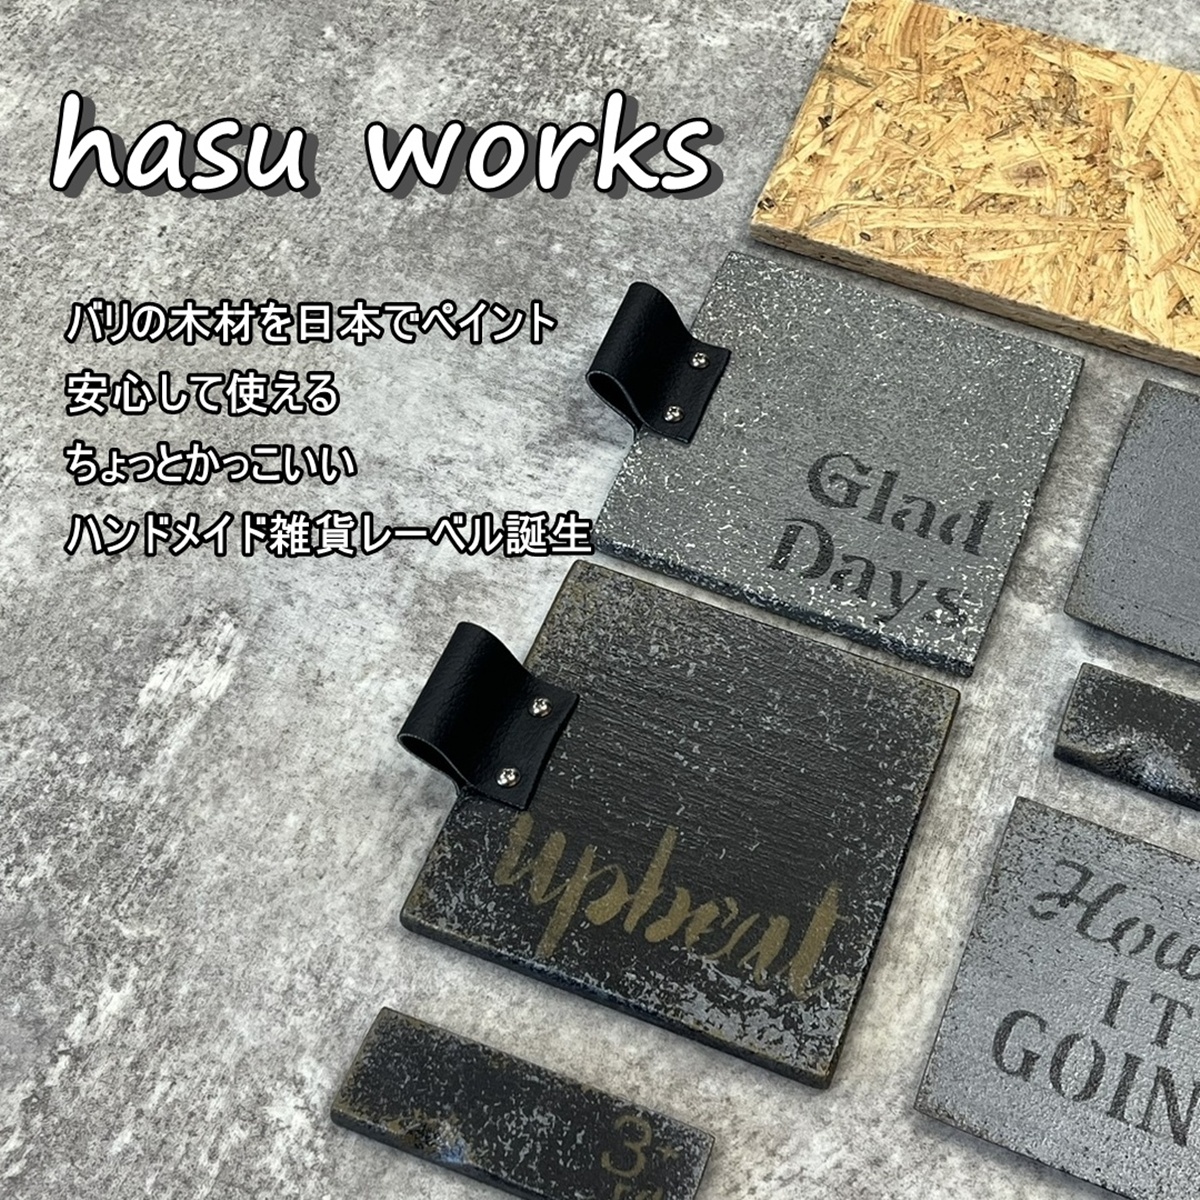 hasu works